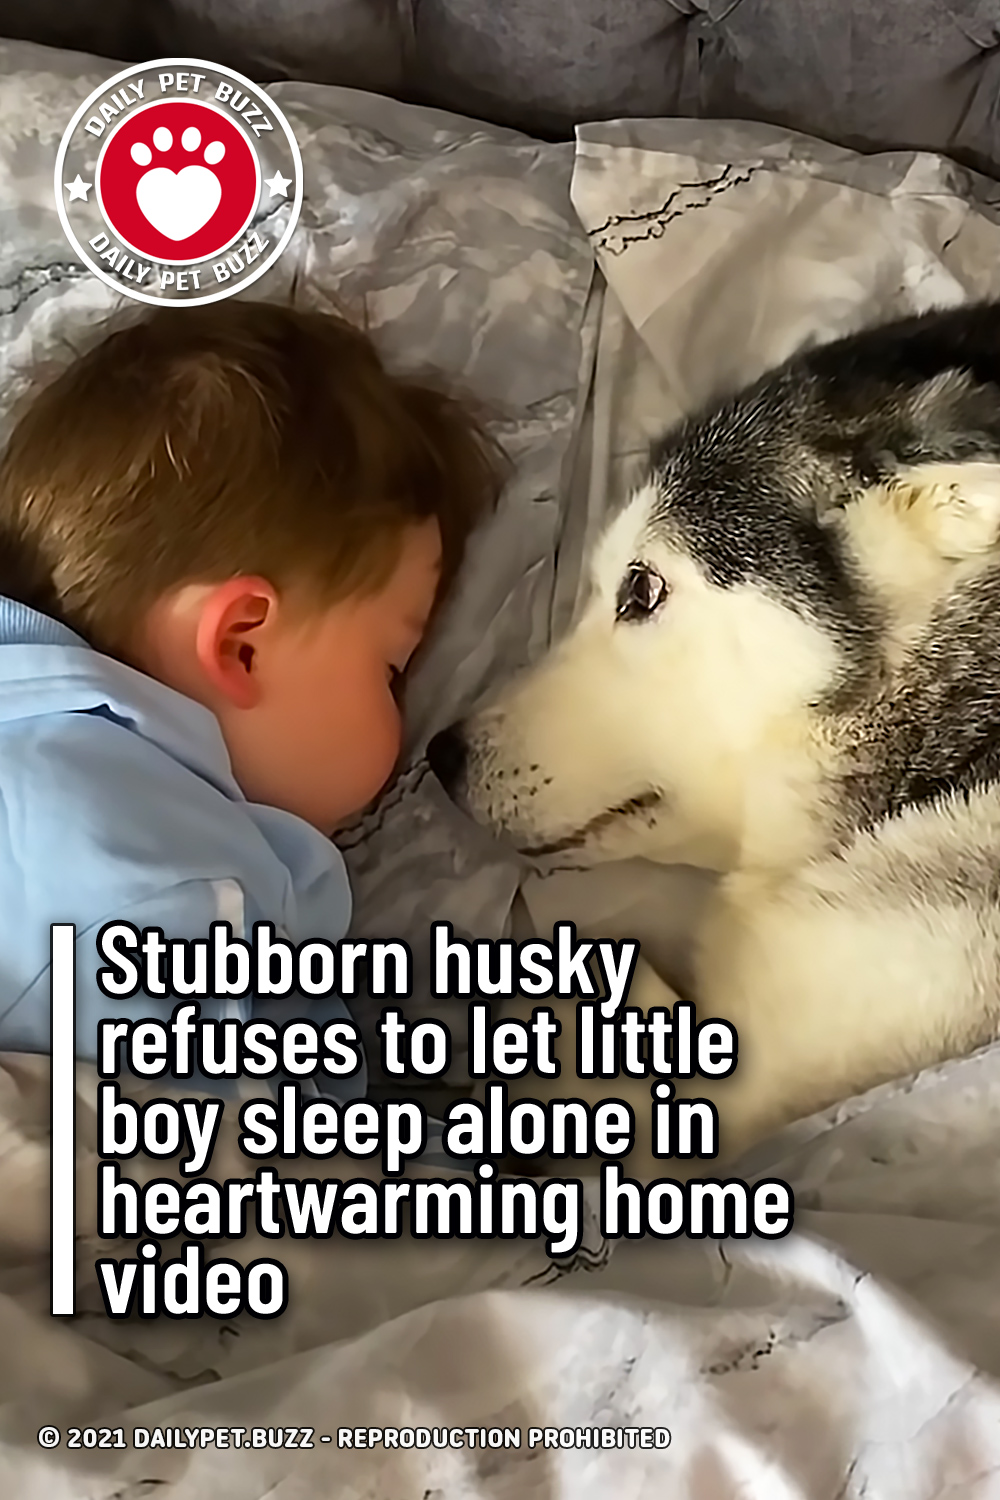 Stubborn husky refuses to let little boy sleep alone in heartwarming home video